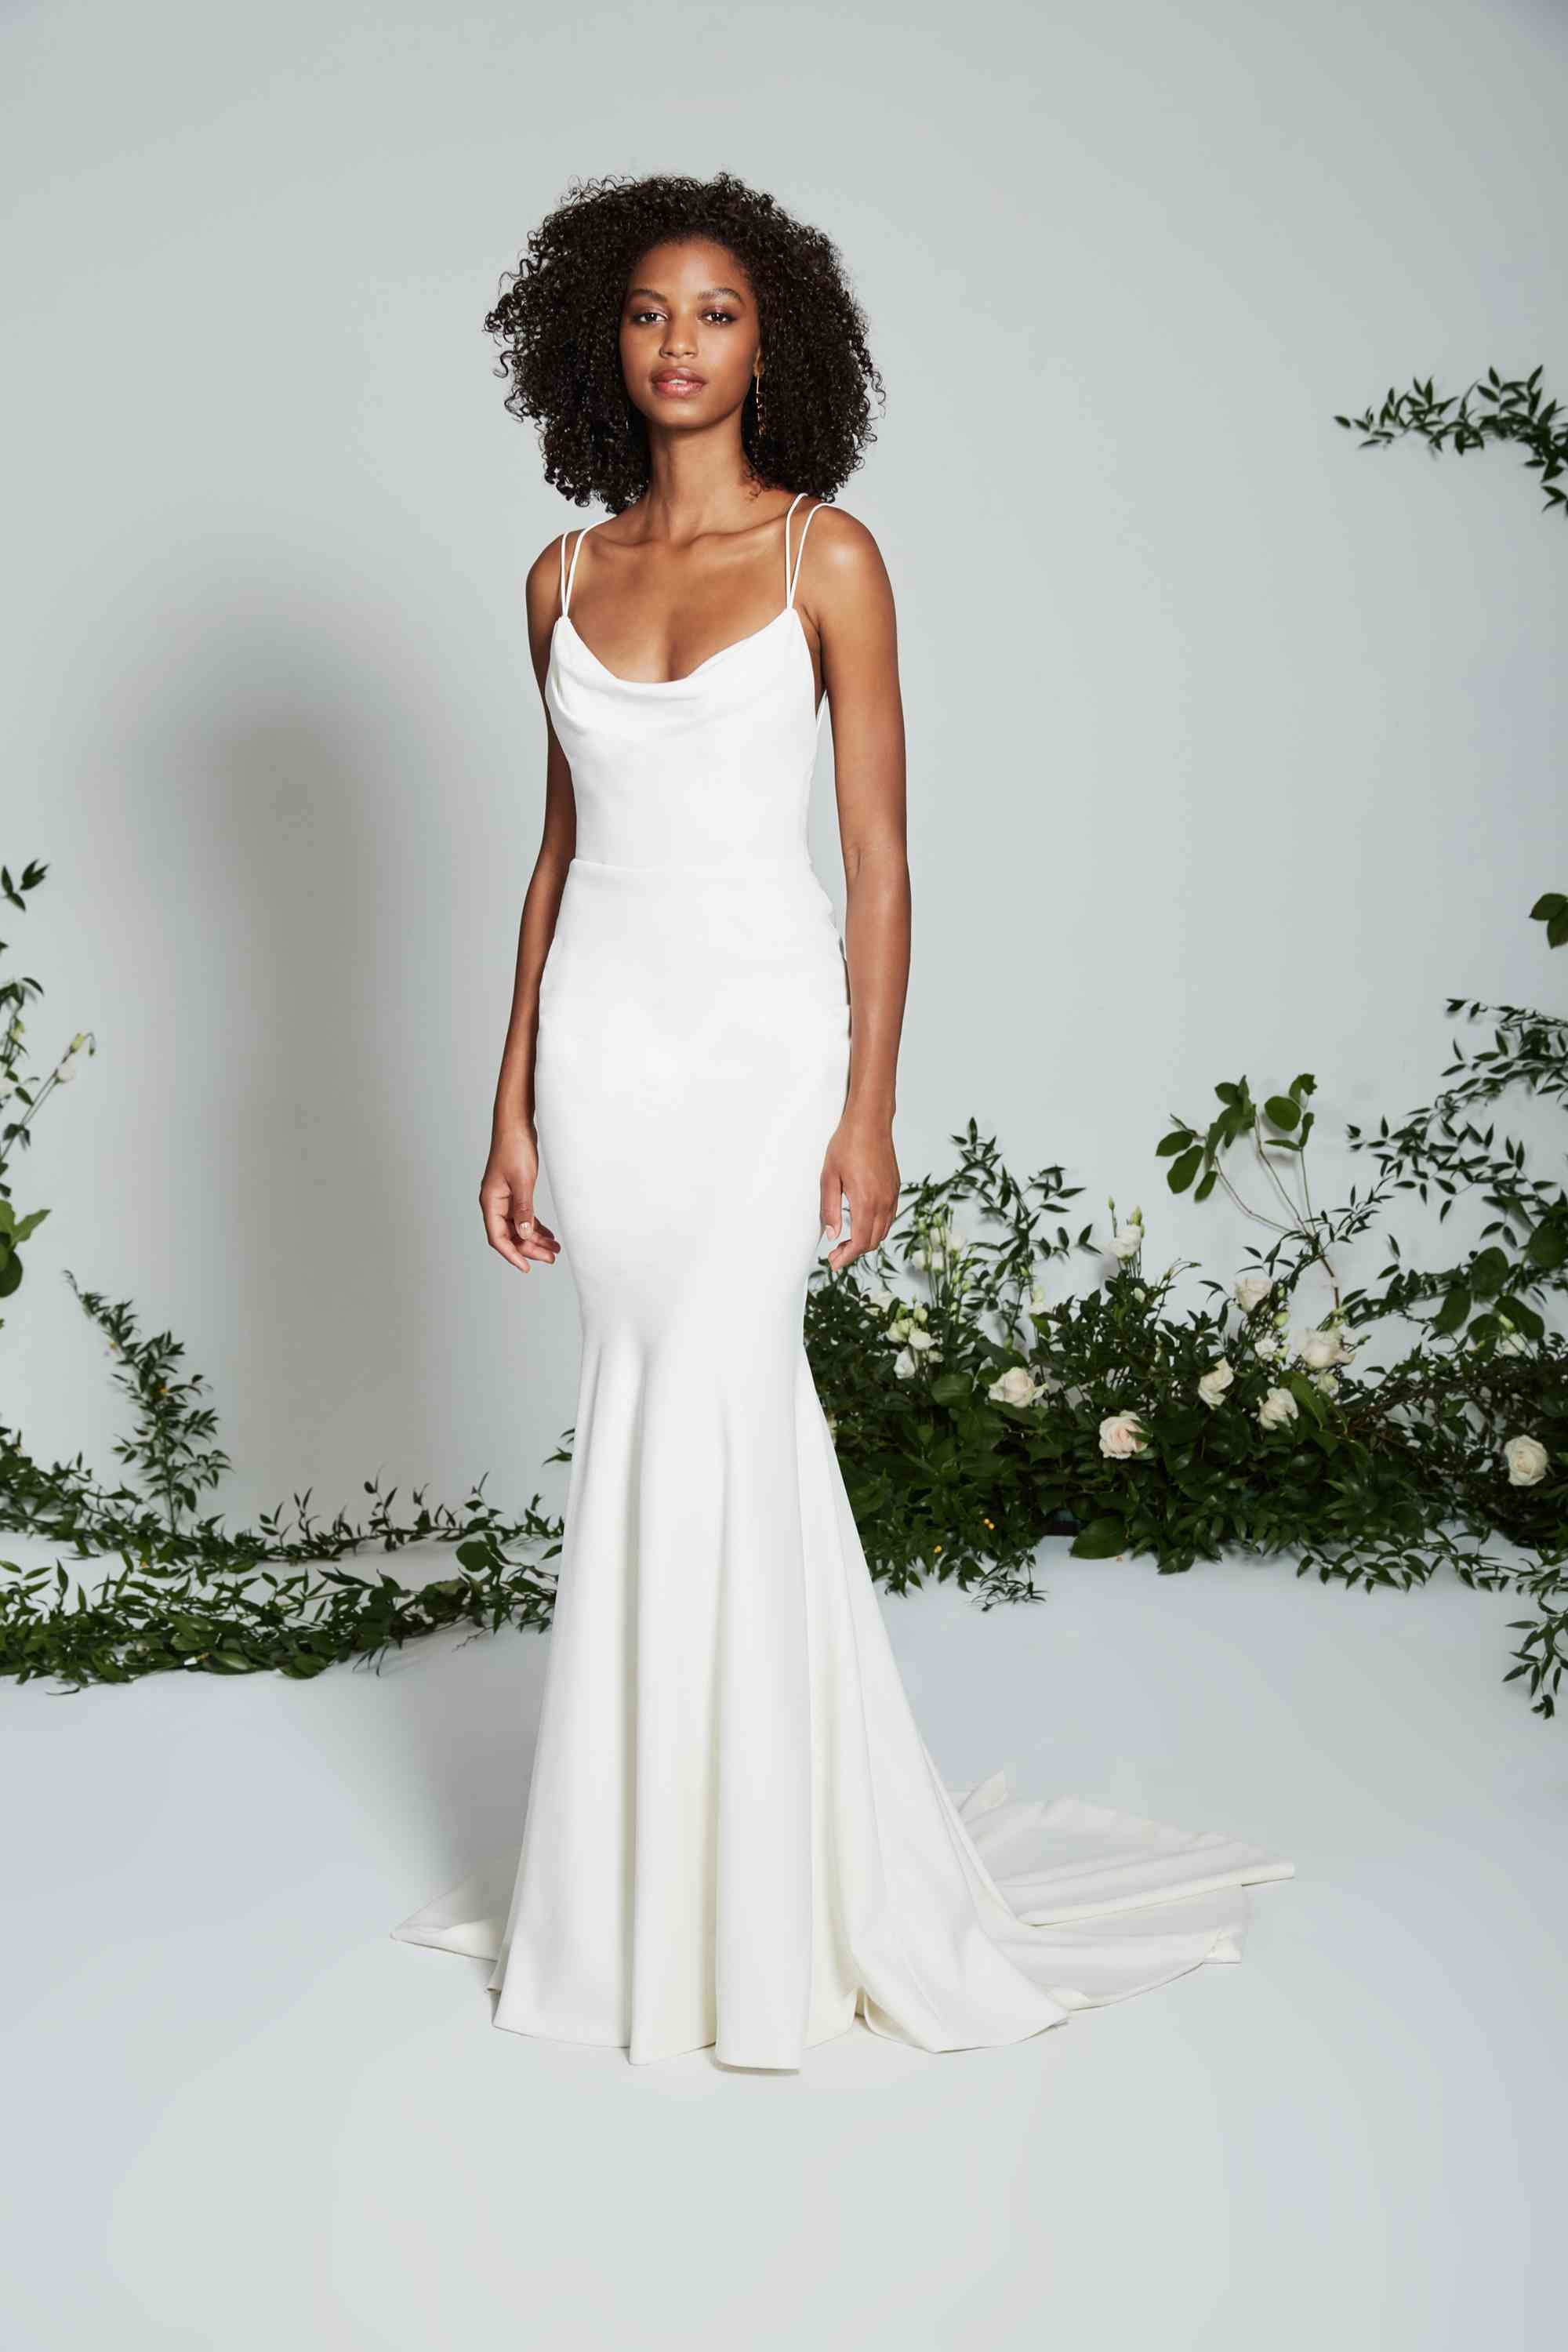 blanc-de-blanc-bridal-boutique-pittsburgh-dress-wedding-gown-ANISE_THEIA (1).jpeg